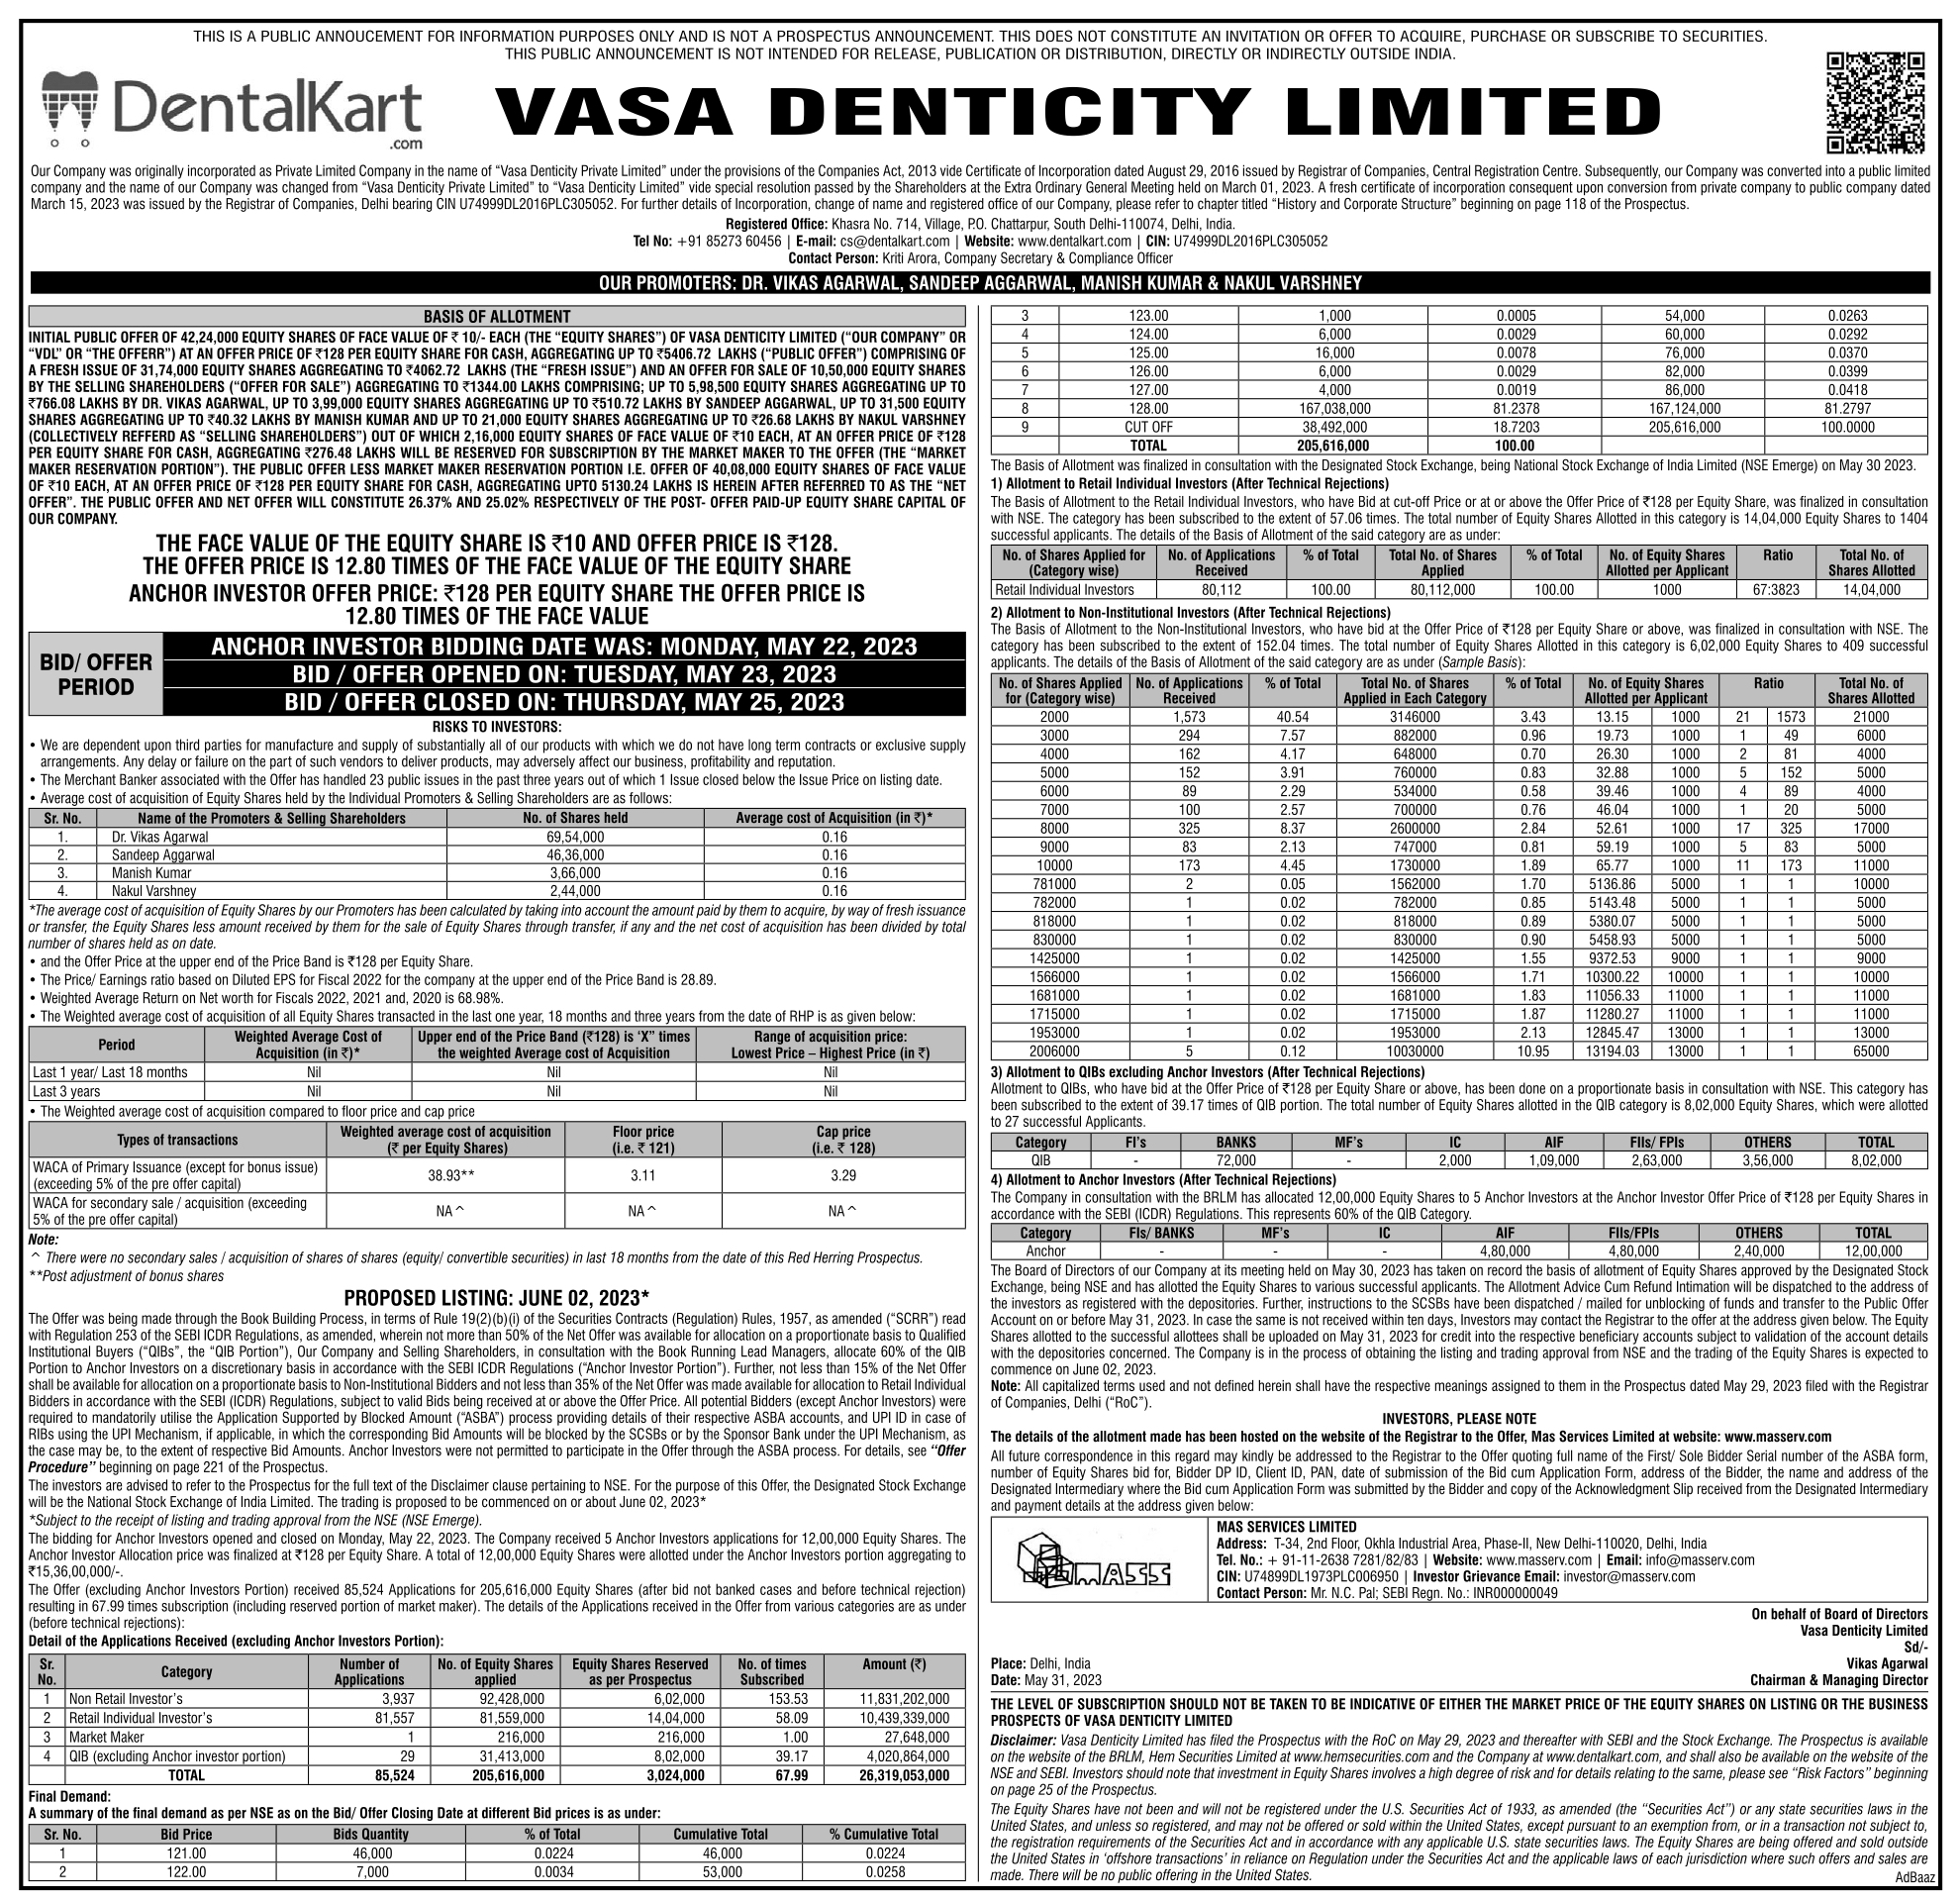 Vasa Denticity Limited IPO Basis of Allotment